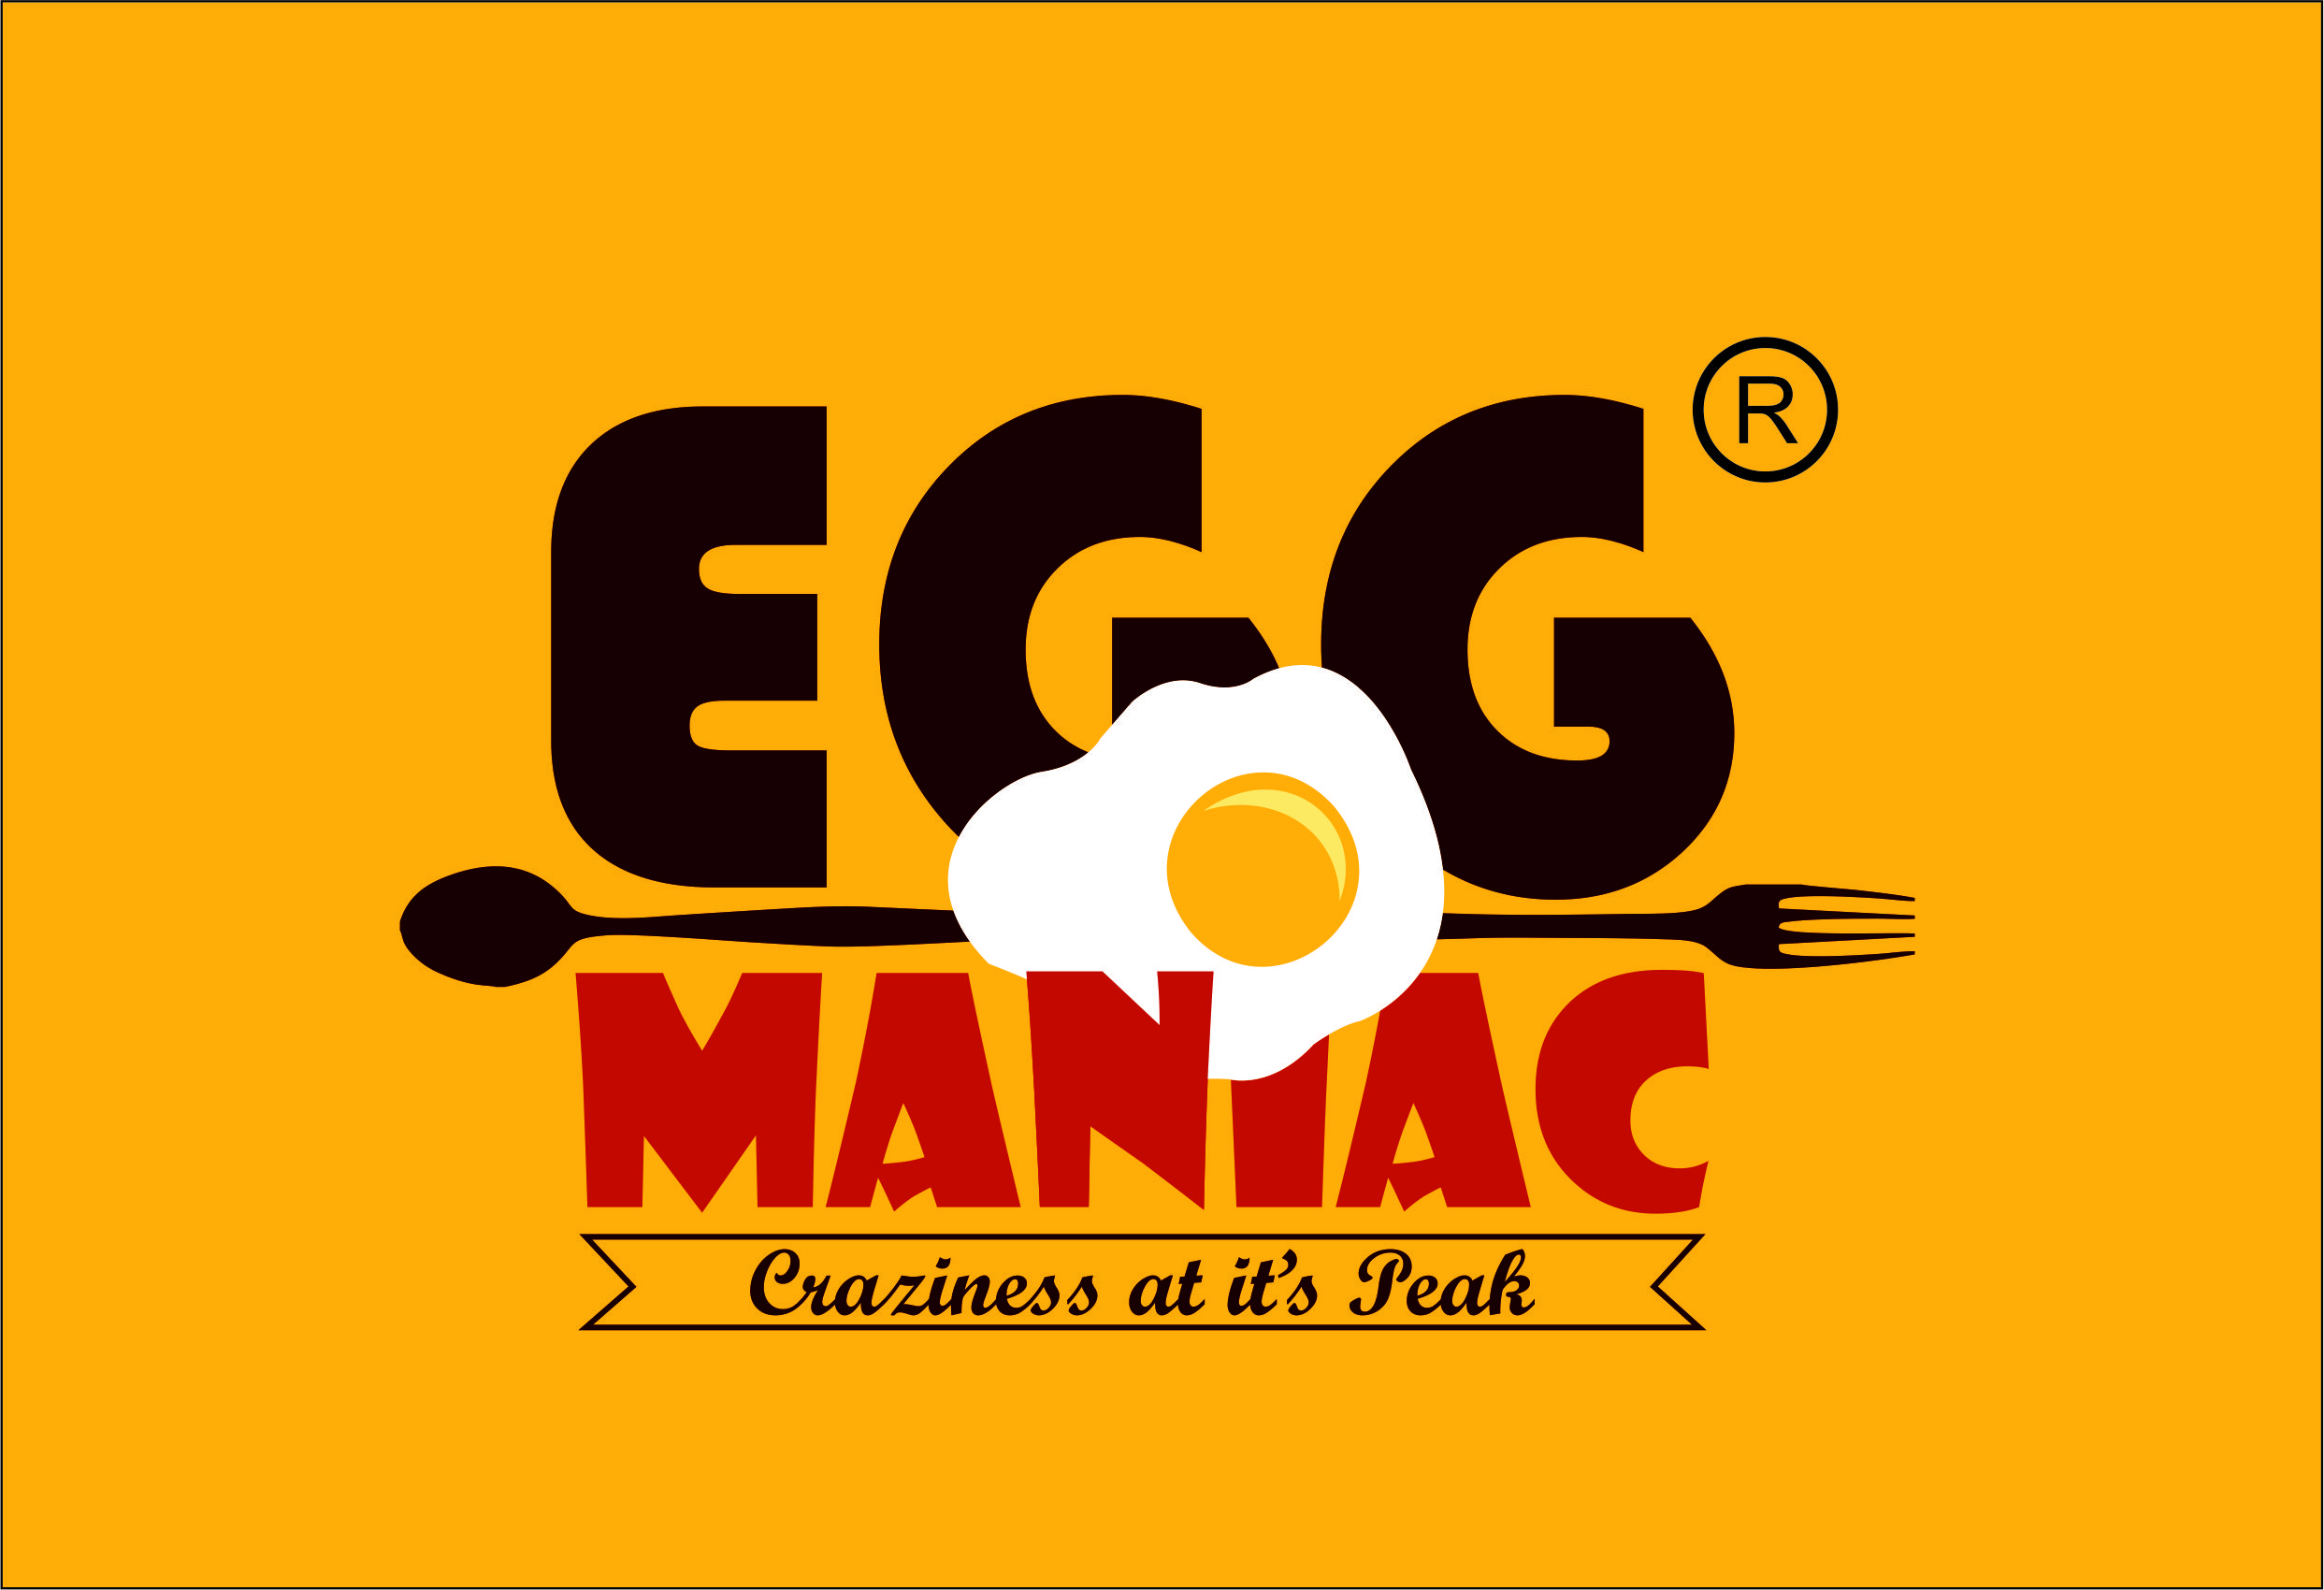 Eggmaniac